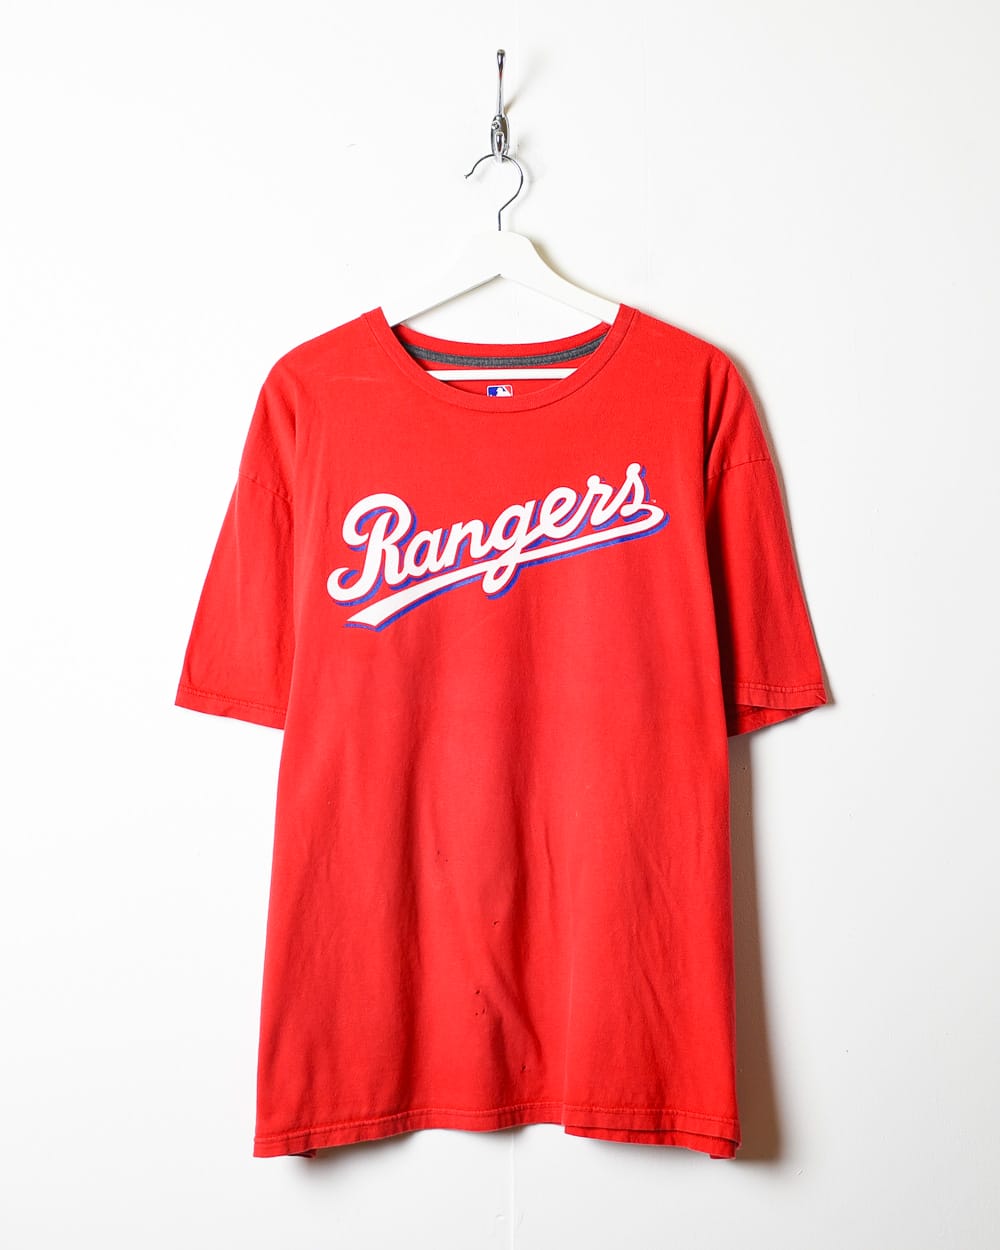 Vintage Texas Rangers Baseball Shirt